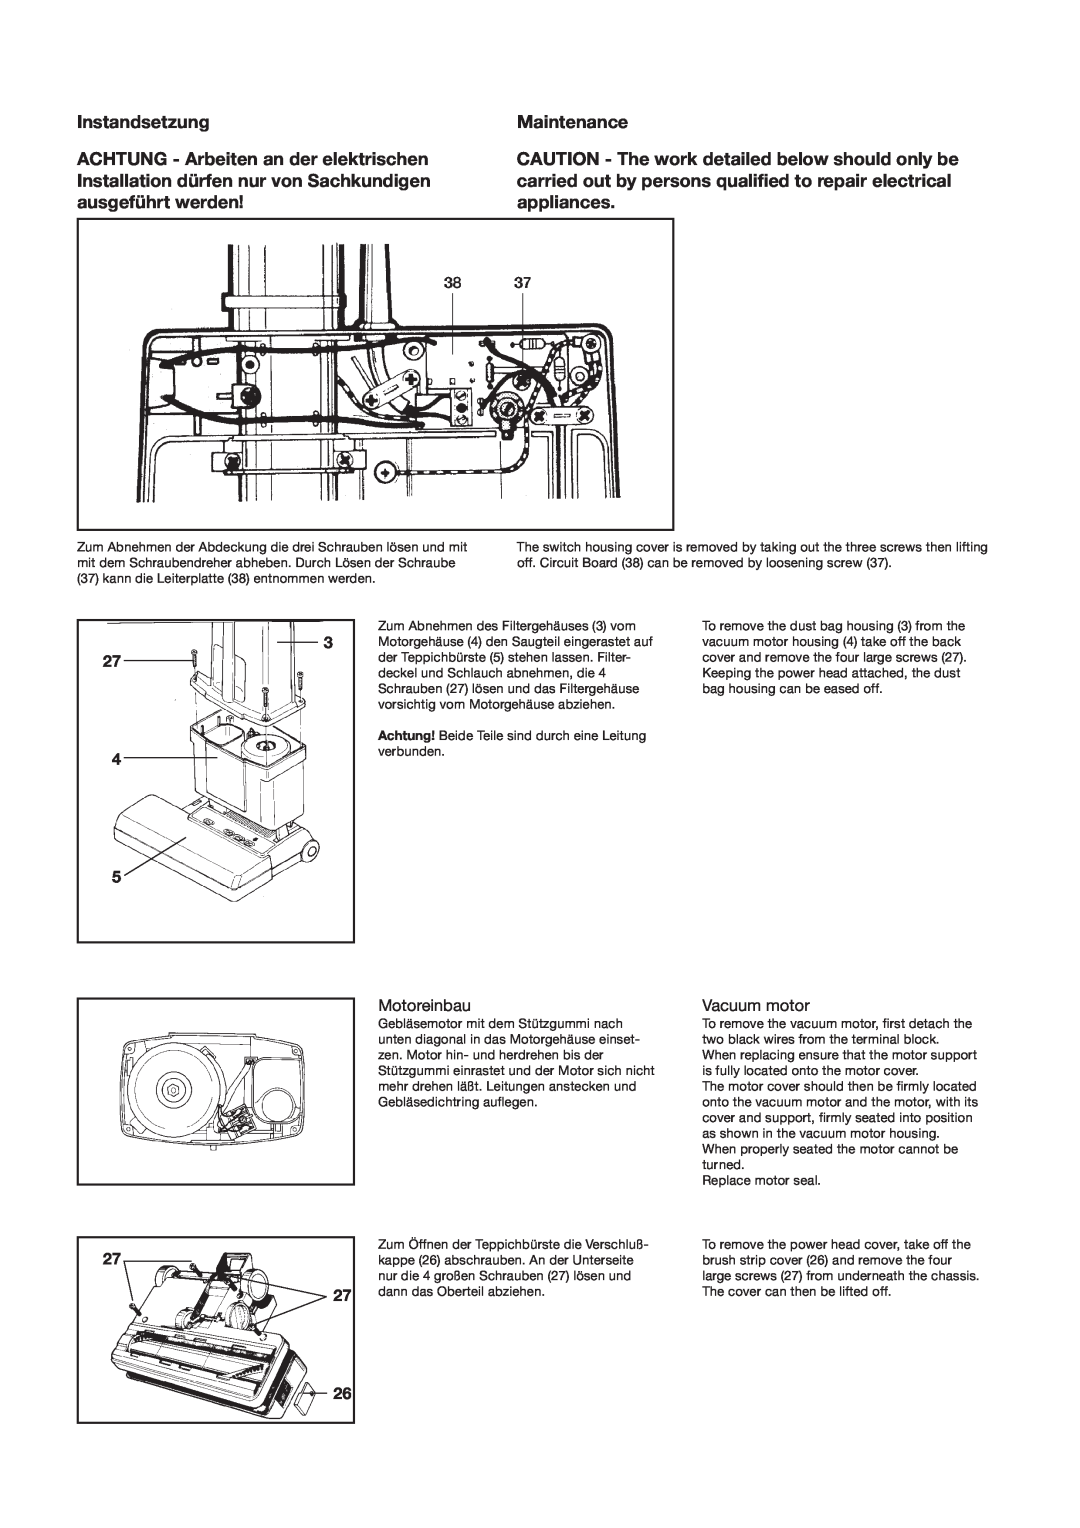 Sebo BS 46 manual Instandsetzung, Maintenance, Motoreinbau, Vacuum motor 